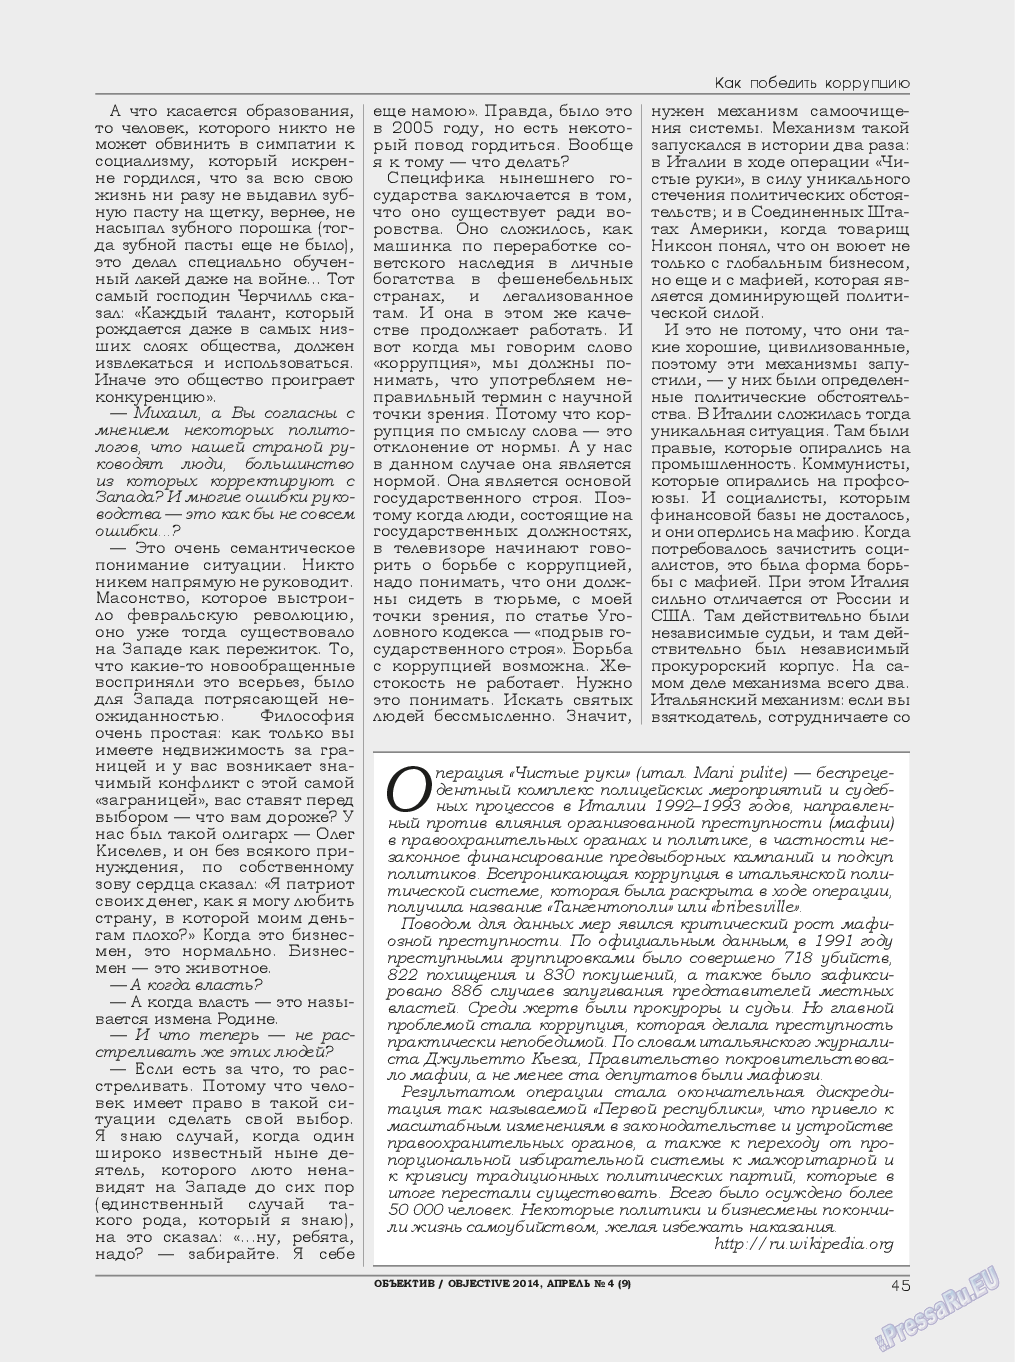 Объектив EU, журнал. 2014 №4 стр.45